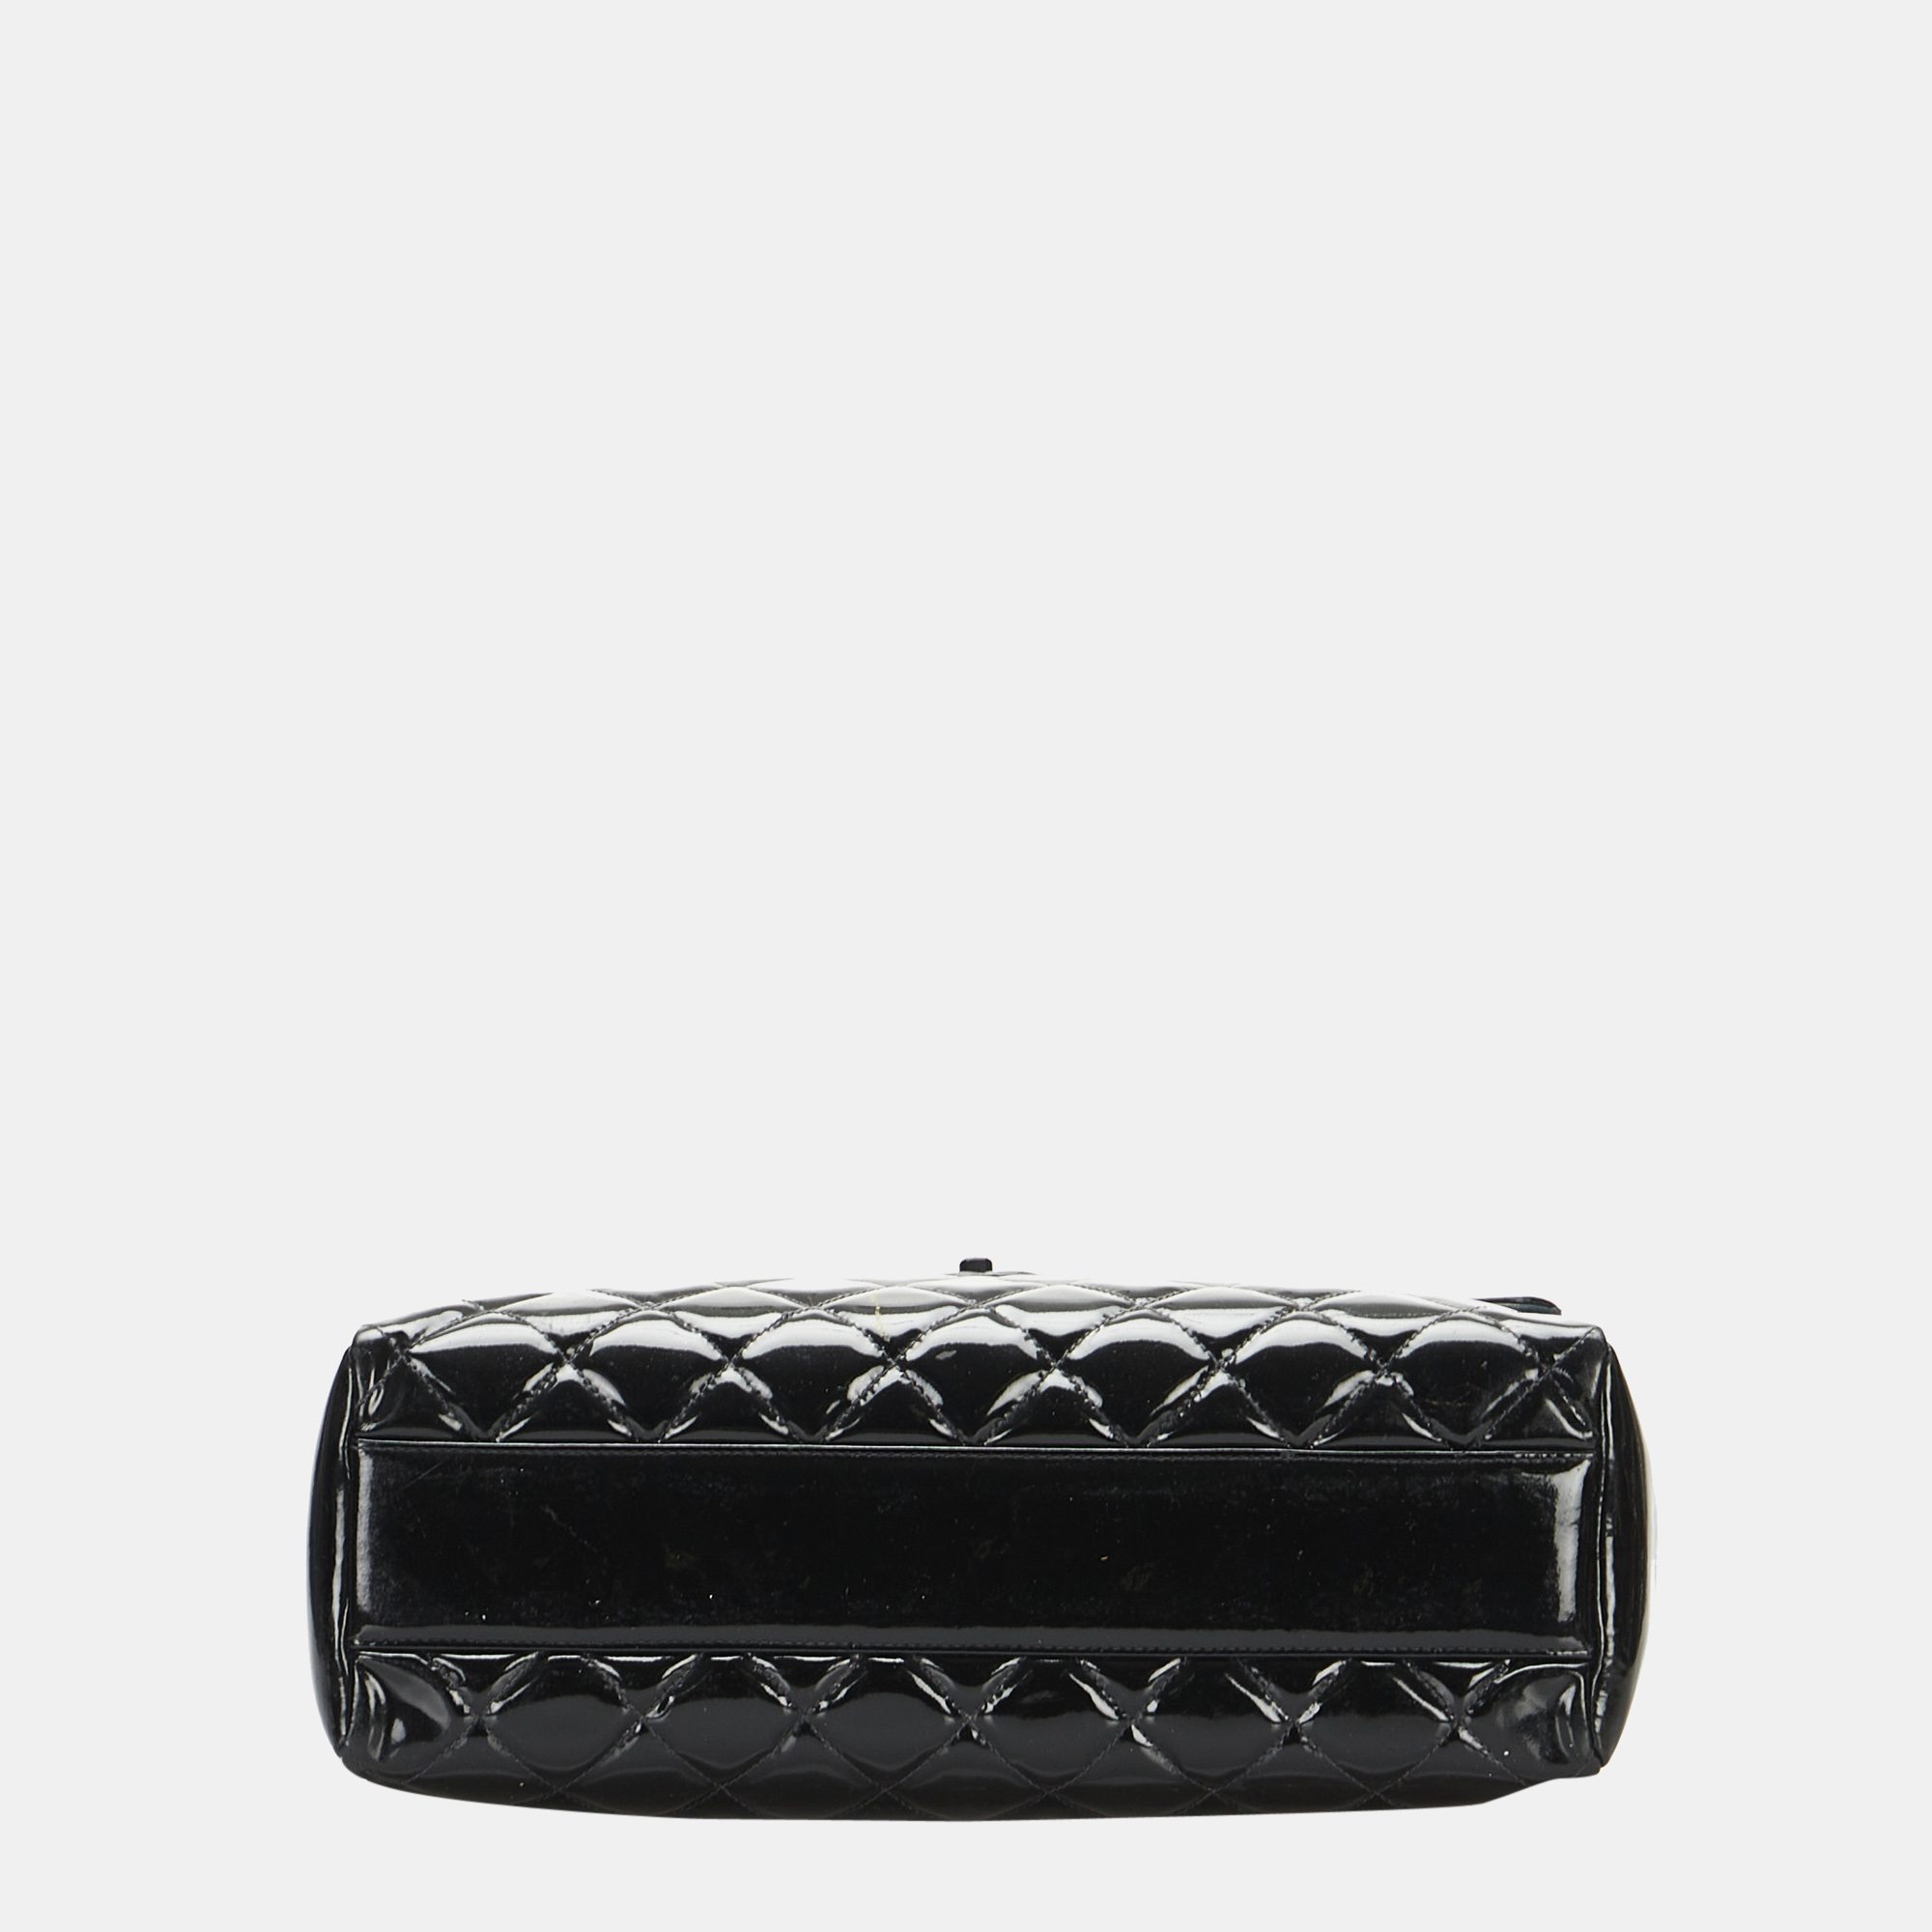 Chanel Black Matelasse Patent Leather Single Flap Bag